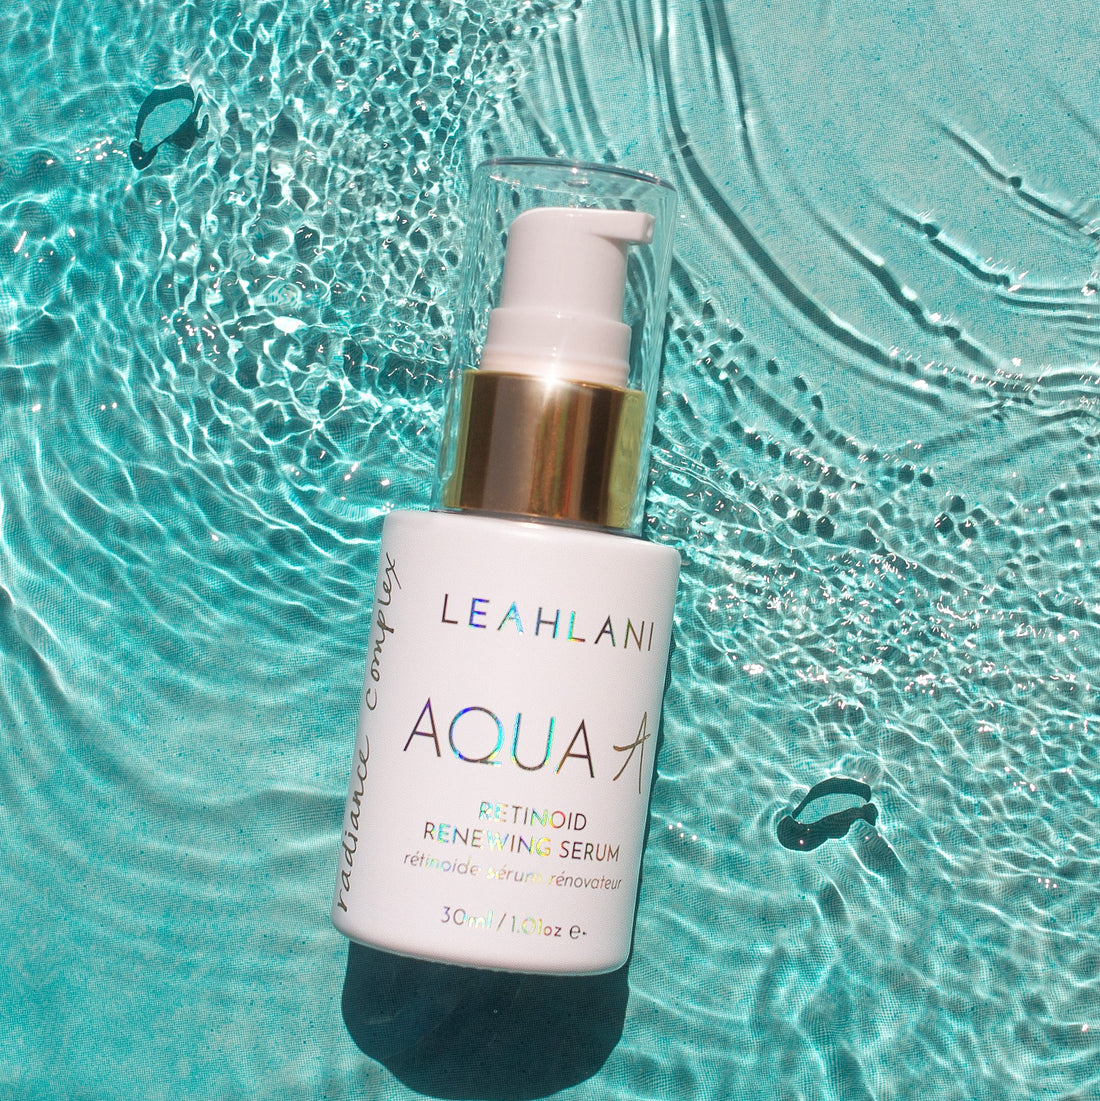 New Product from Leahlani: Meet Aqua A